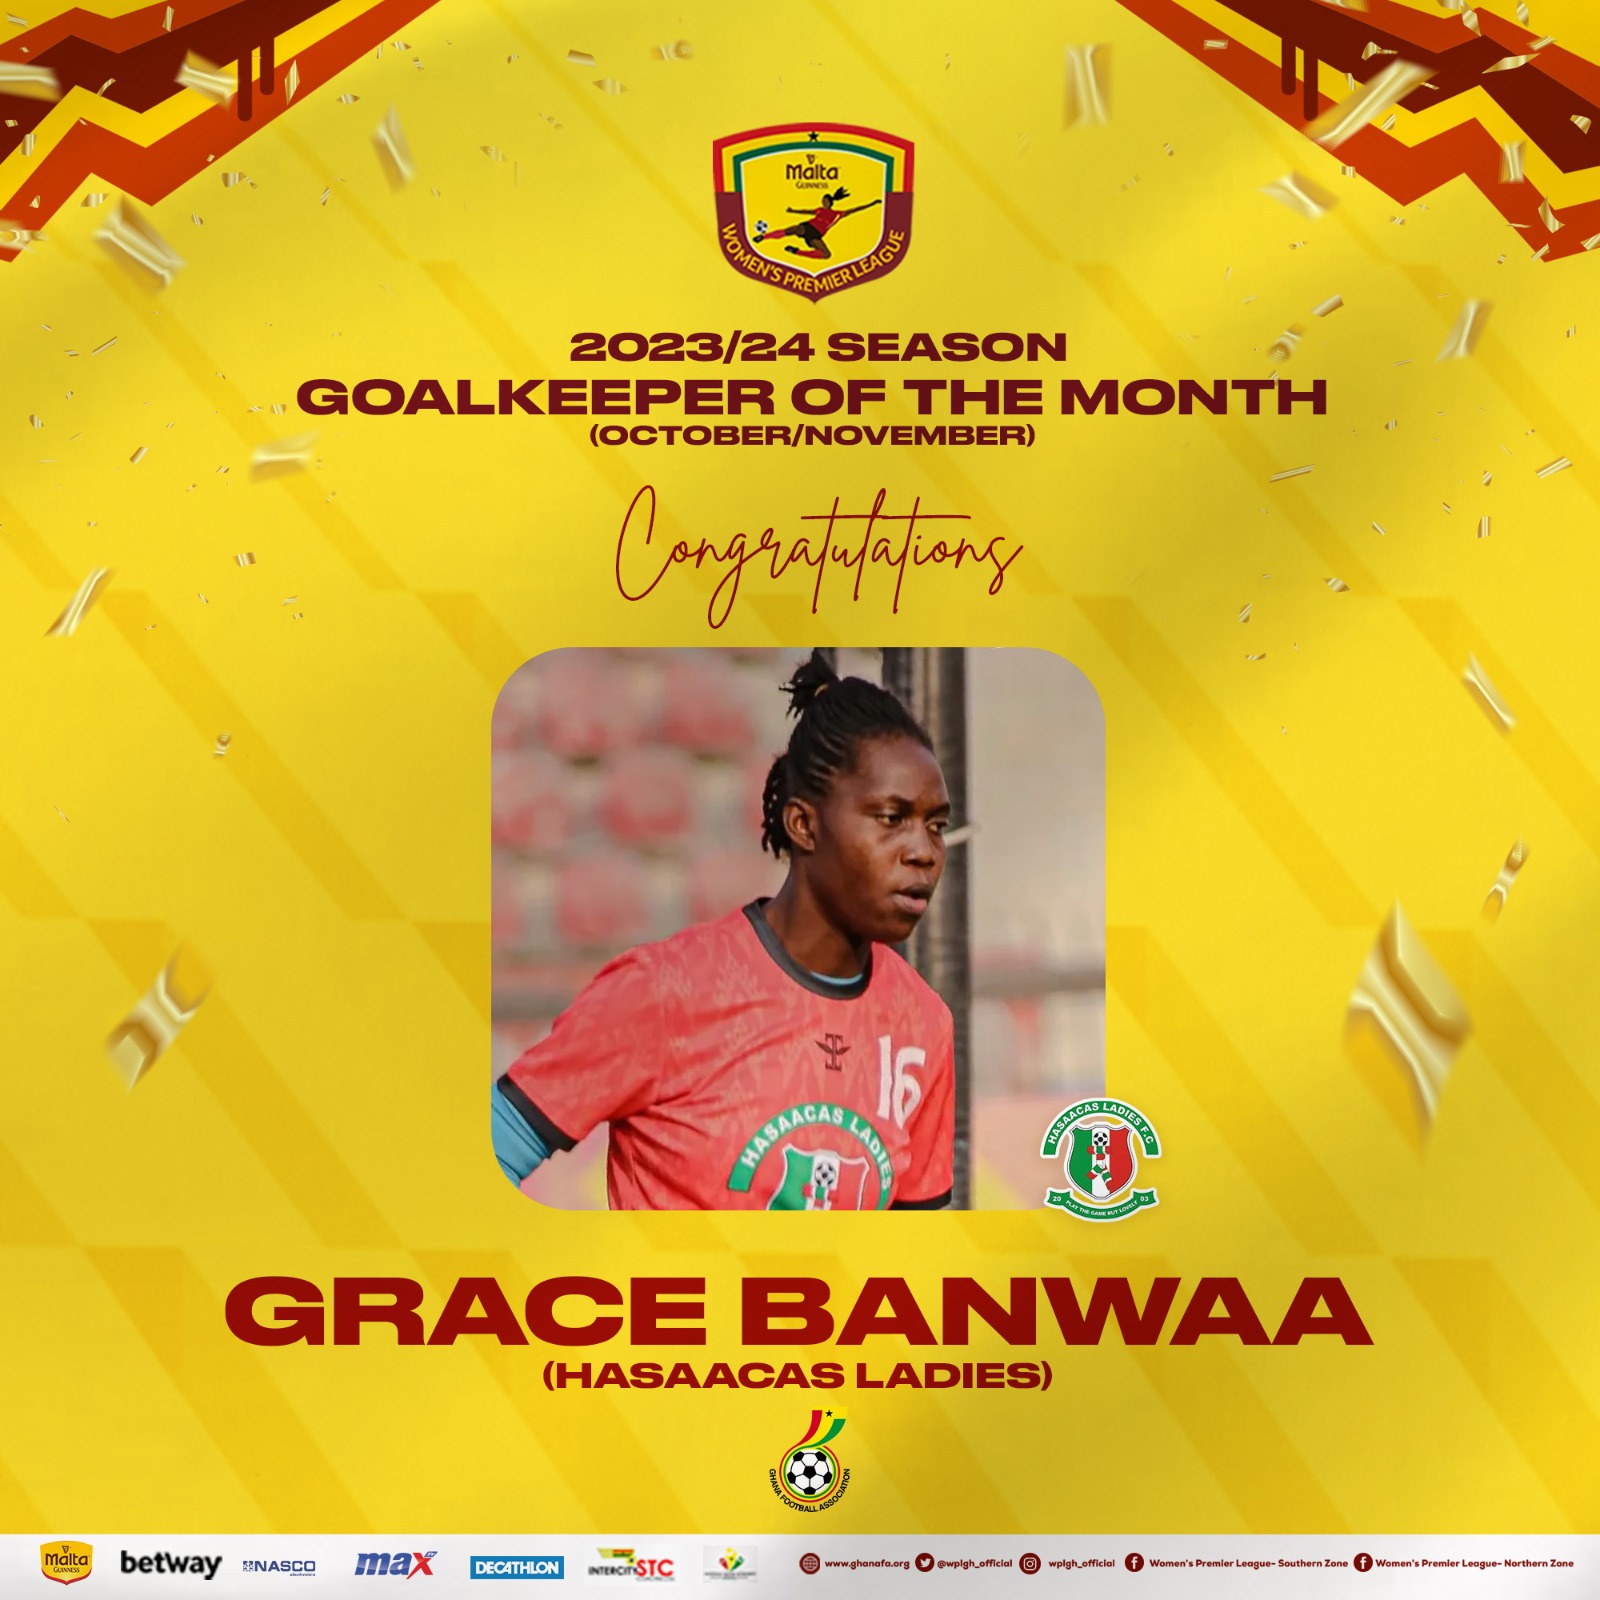 Grace Banwaa wins RG World goalkeeper of the month for October/November